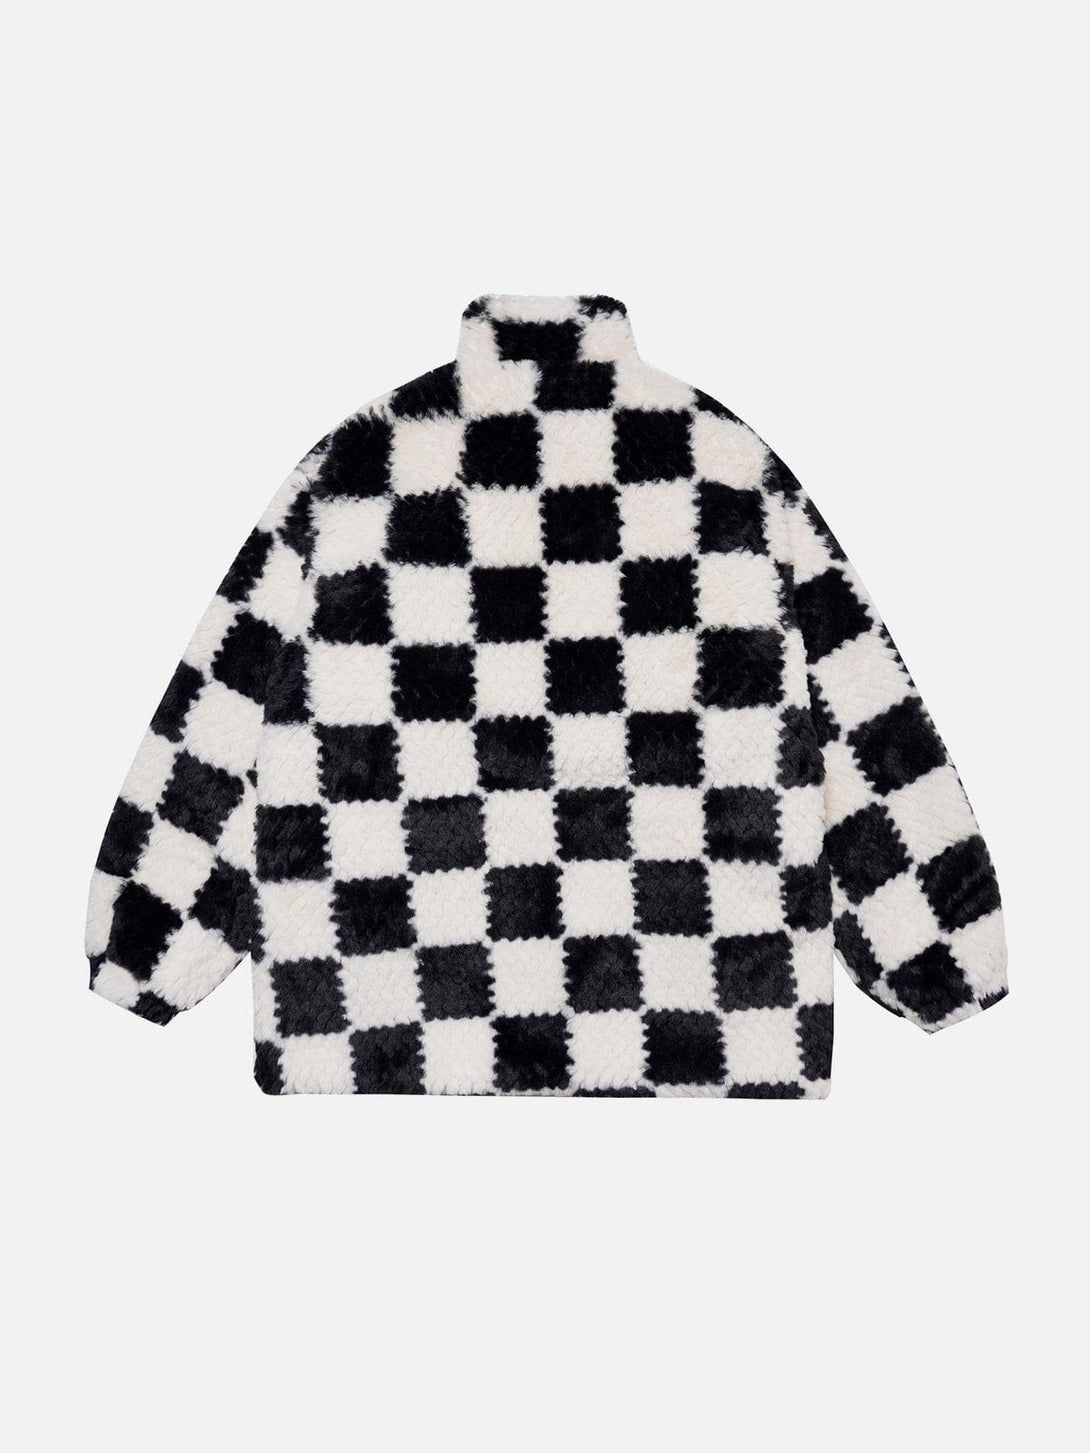 Majesda® - Contrast Checkerboard Sherpa Coat outfit ideas streetwear fashion